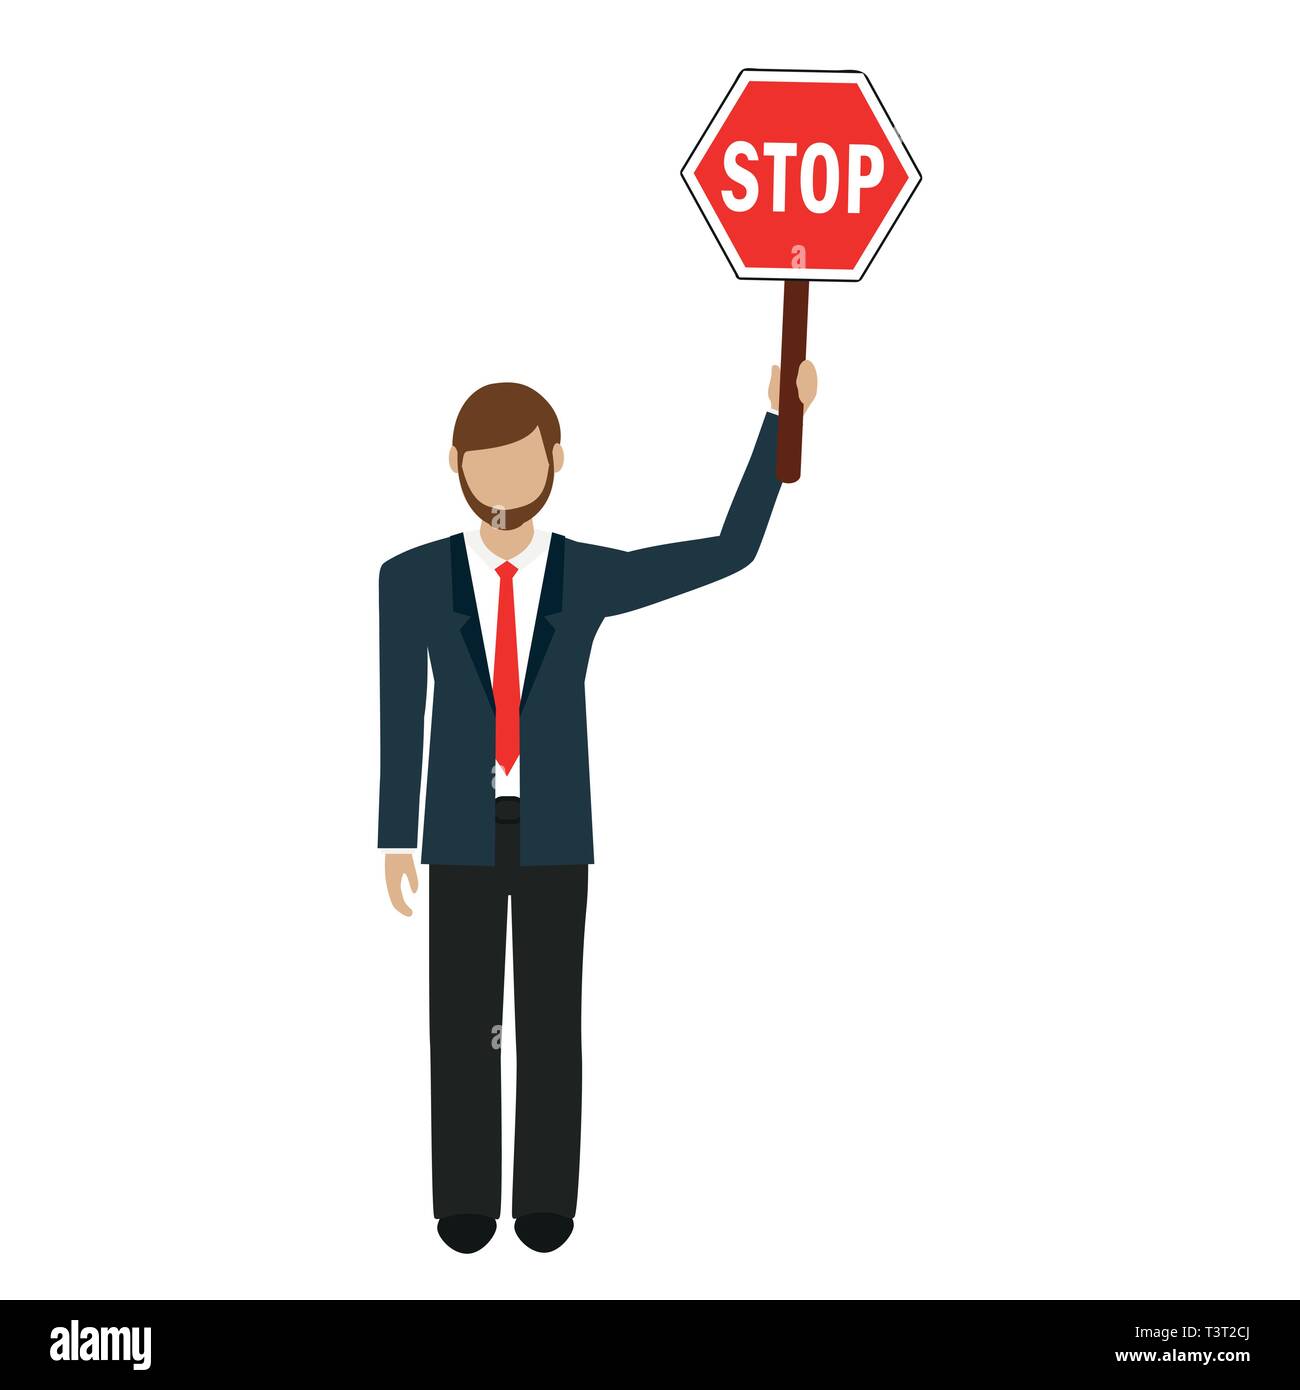 Business Mann mit STOP-Schild in der Hand Vektor-illustration EPS 10. Stock Vektor